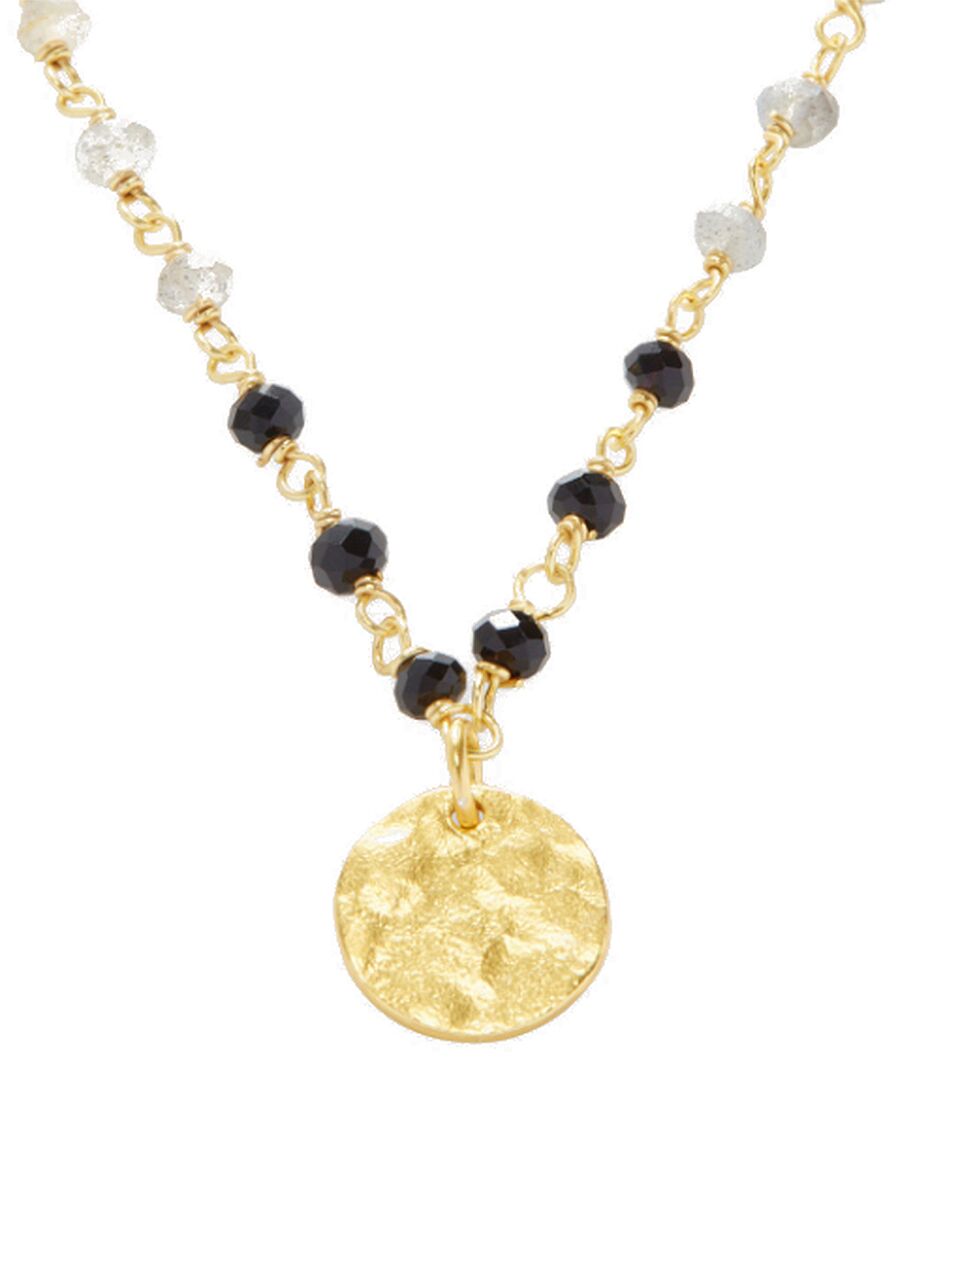 Paris Coin Necklace - Black Onyx & Labradorite